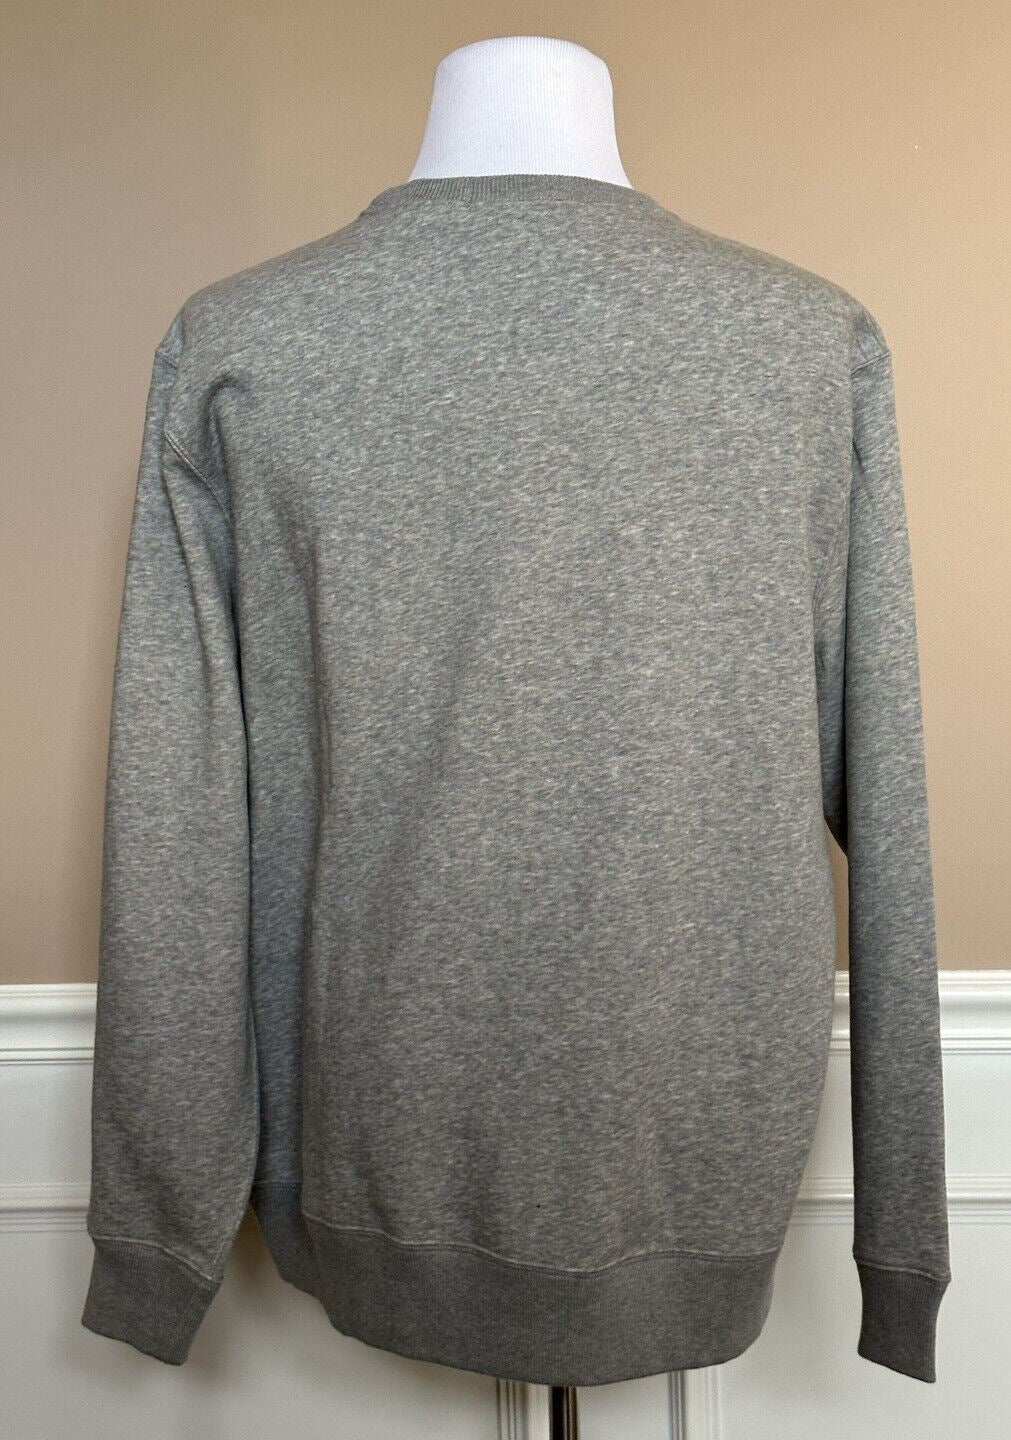 New $168 Polo Ralph Lauren Bear Sweatshirt Grey XL/TG